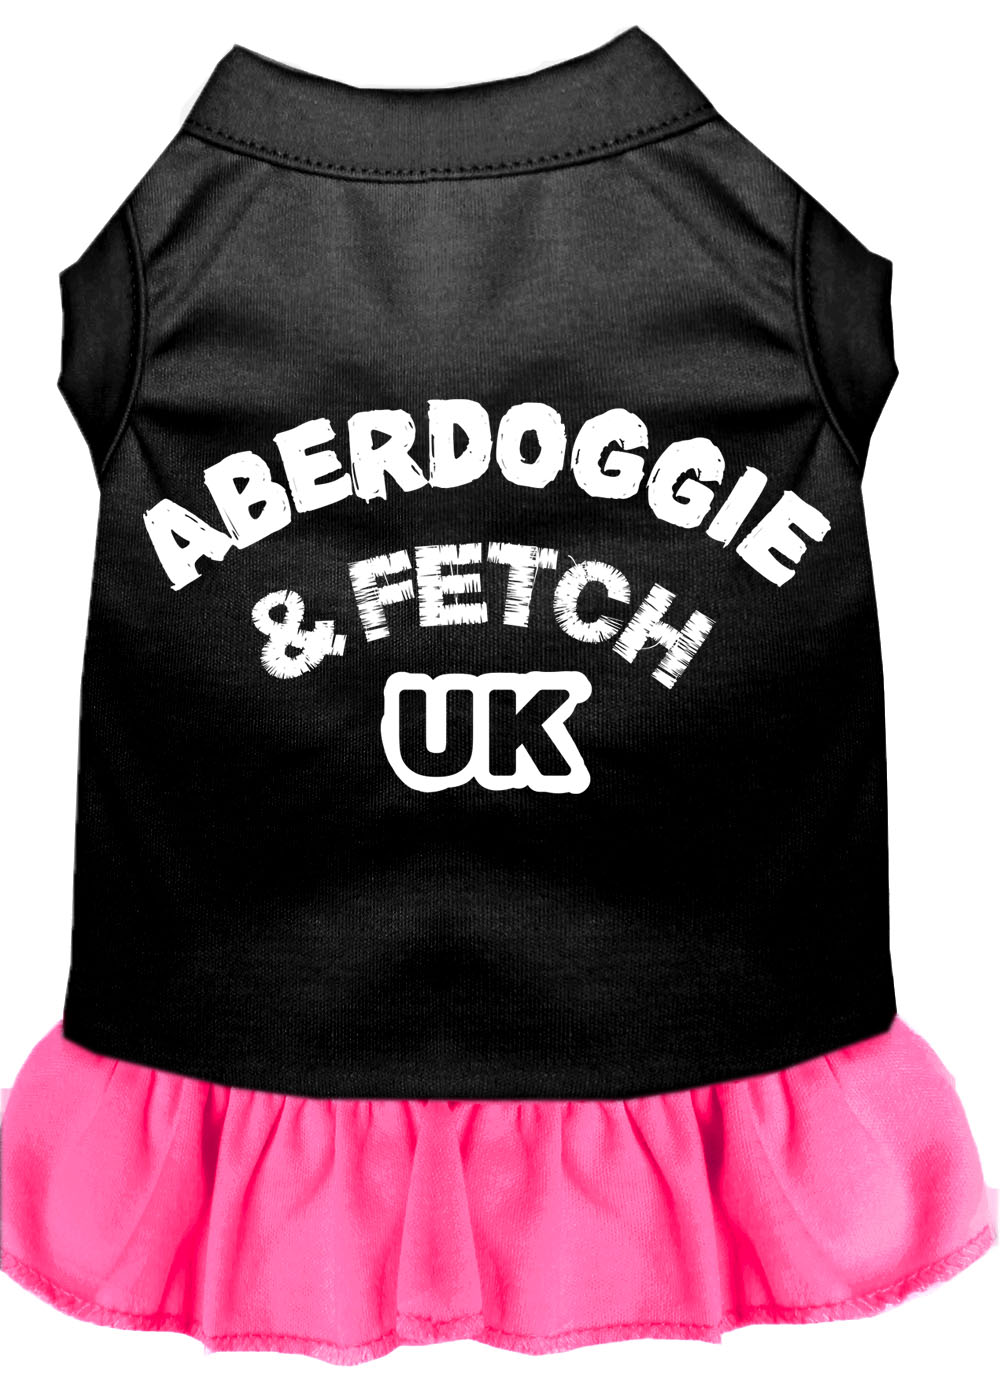 Aberdoggie Uk Screen Print Dress Black With Bright Pink Med GreatEagleInc